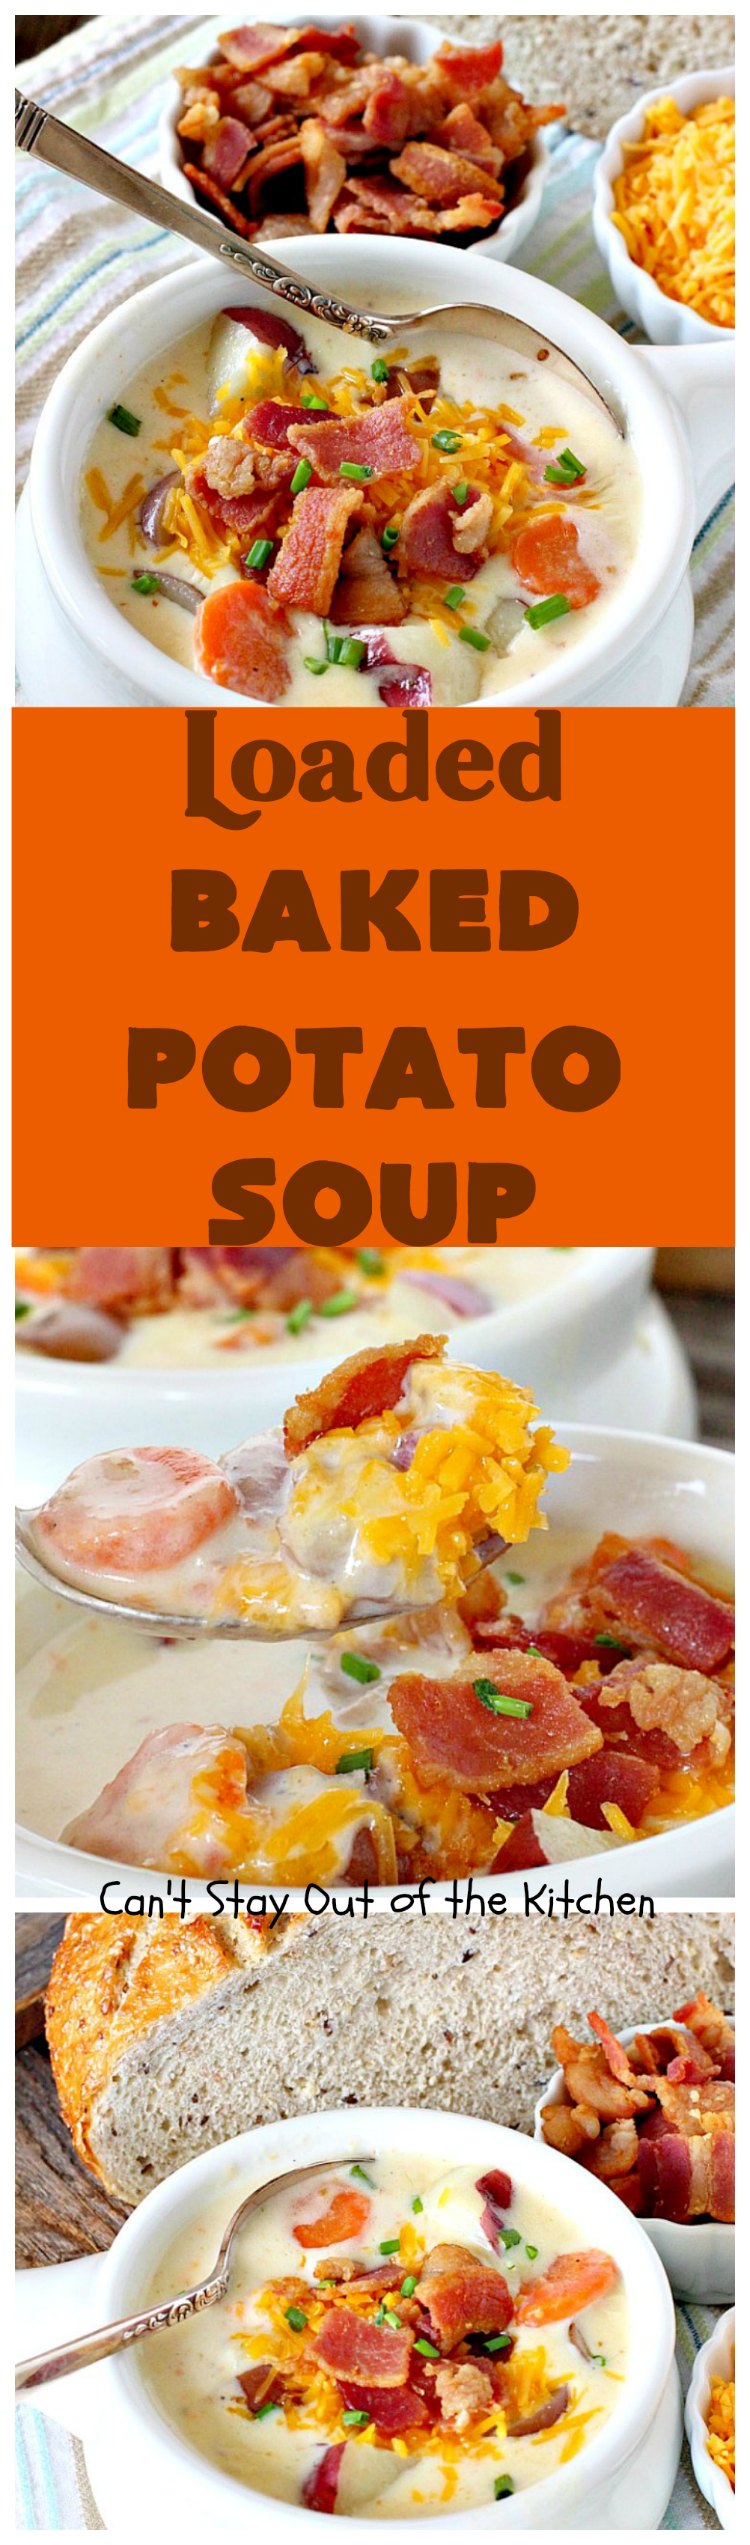 http://cantstayoutofthekitchen.com/wp-content/uploads/Loaded-Baked-Potato-Soup-Collage.jpg